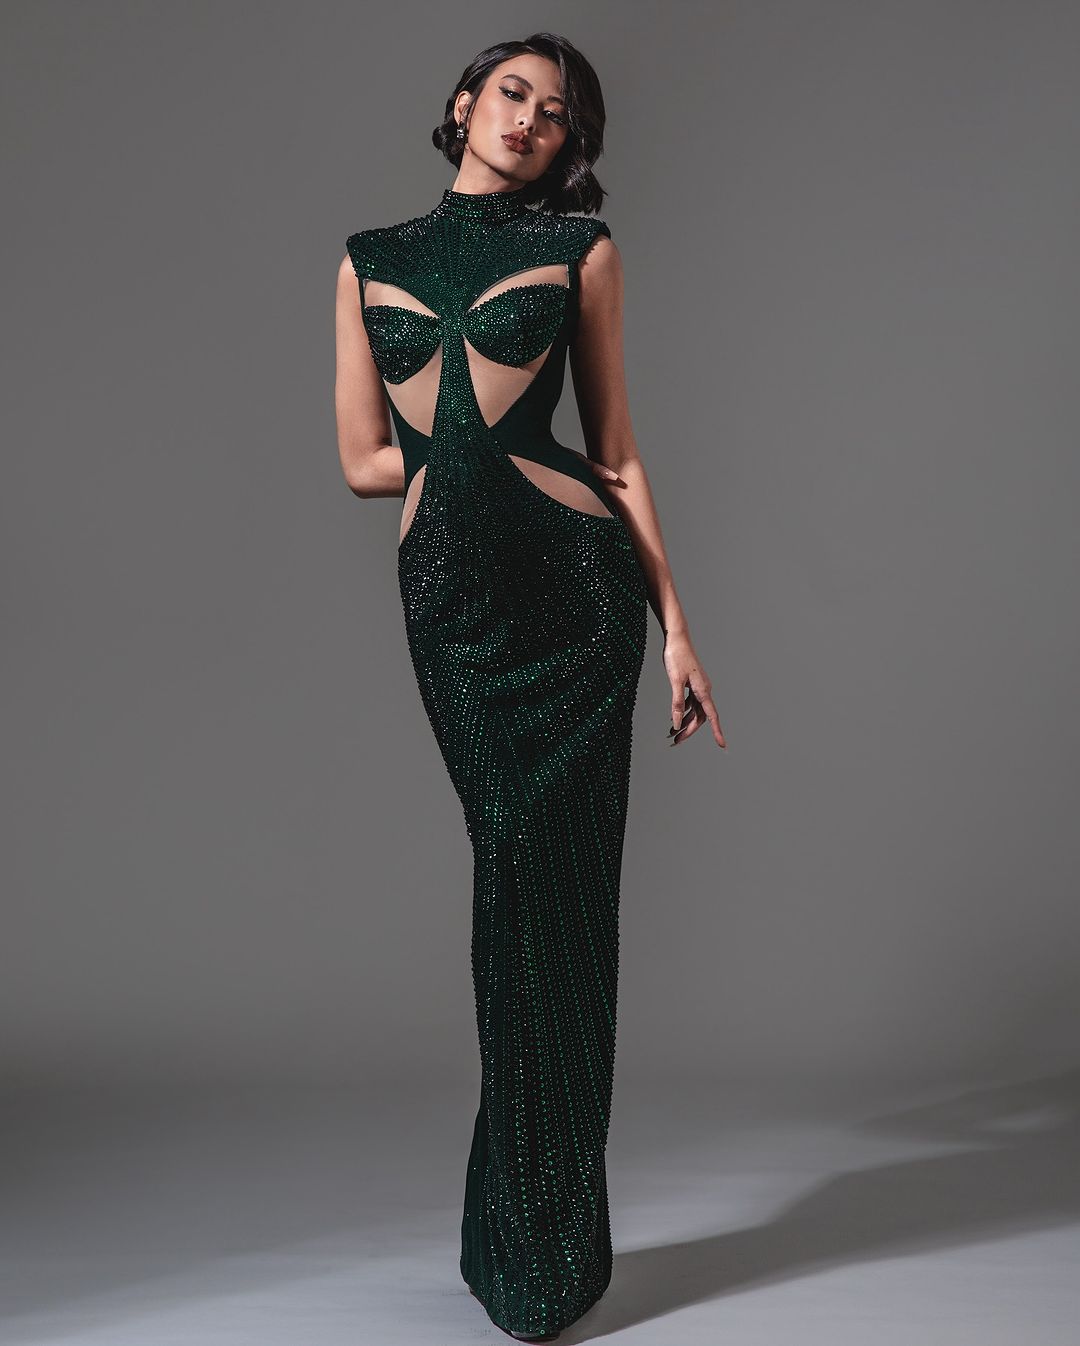 Miss Universe gown designed by Mark Bumgarner